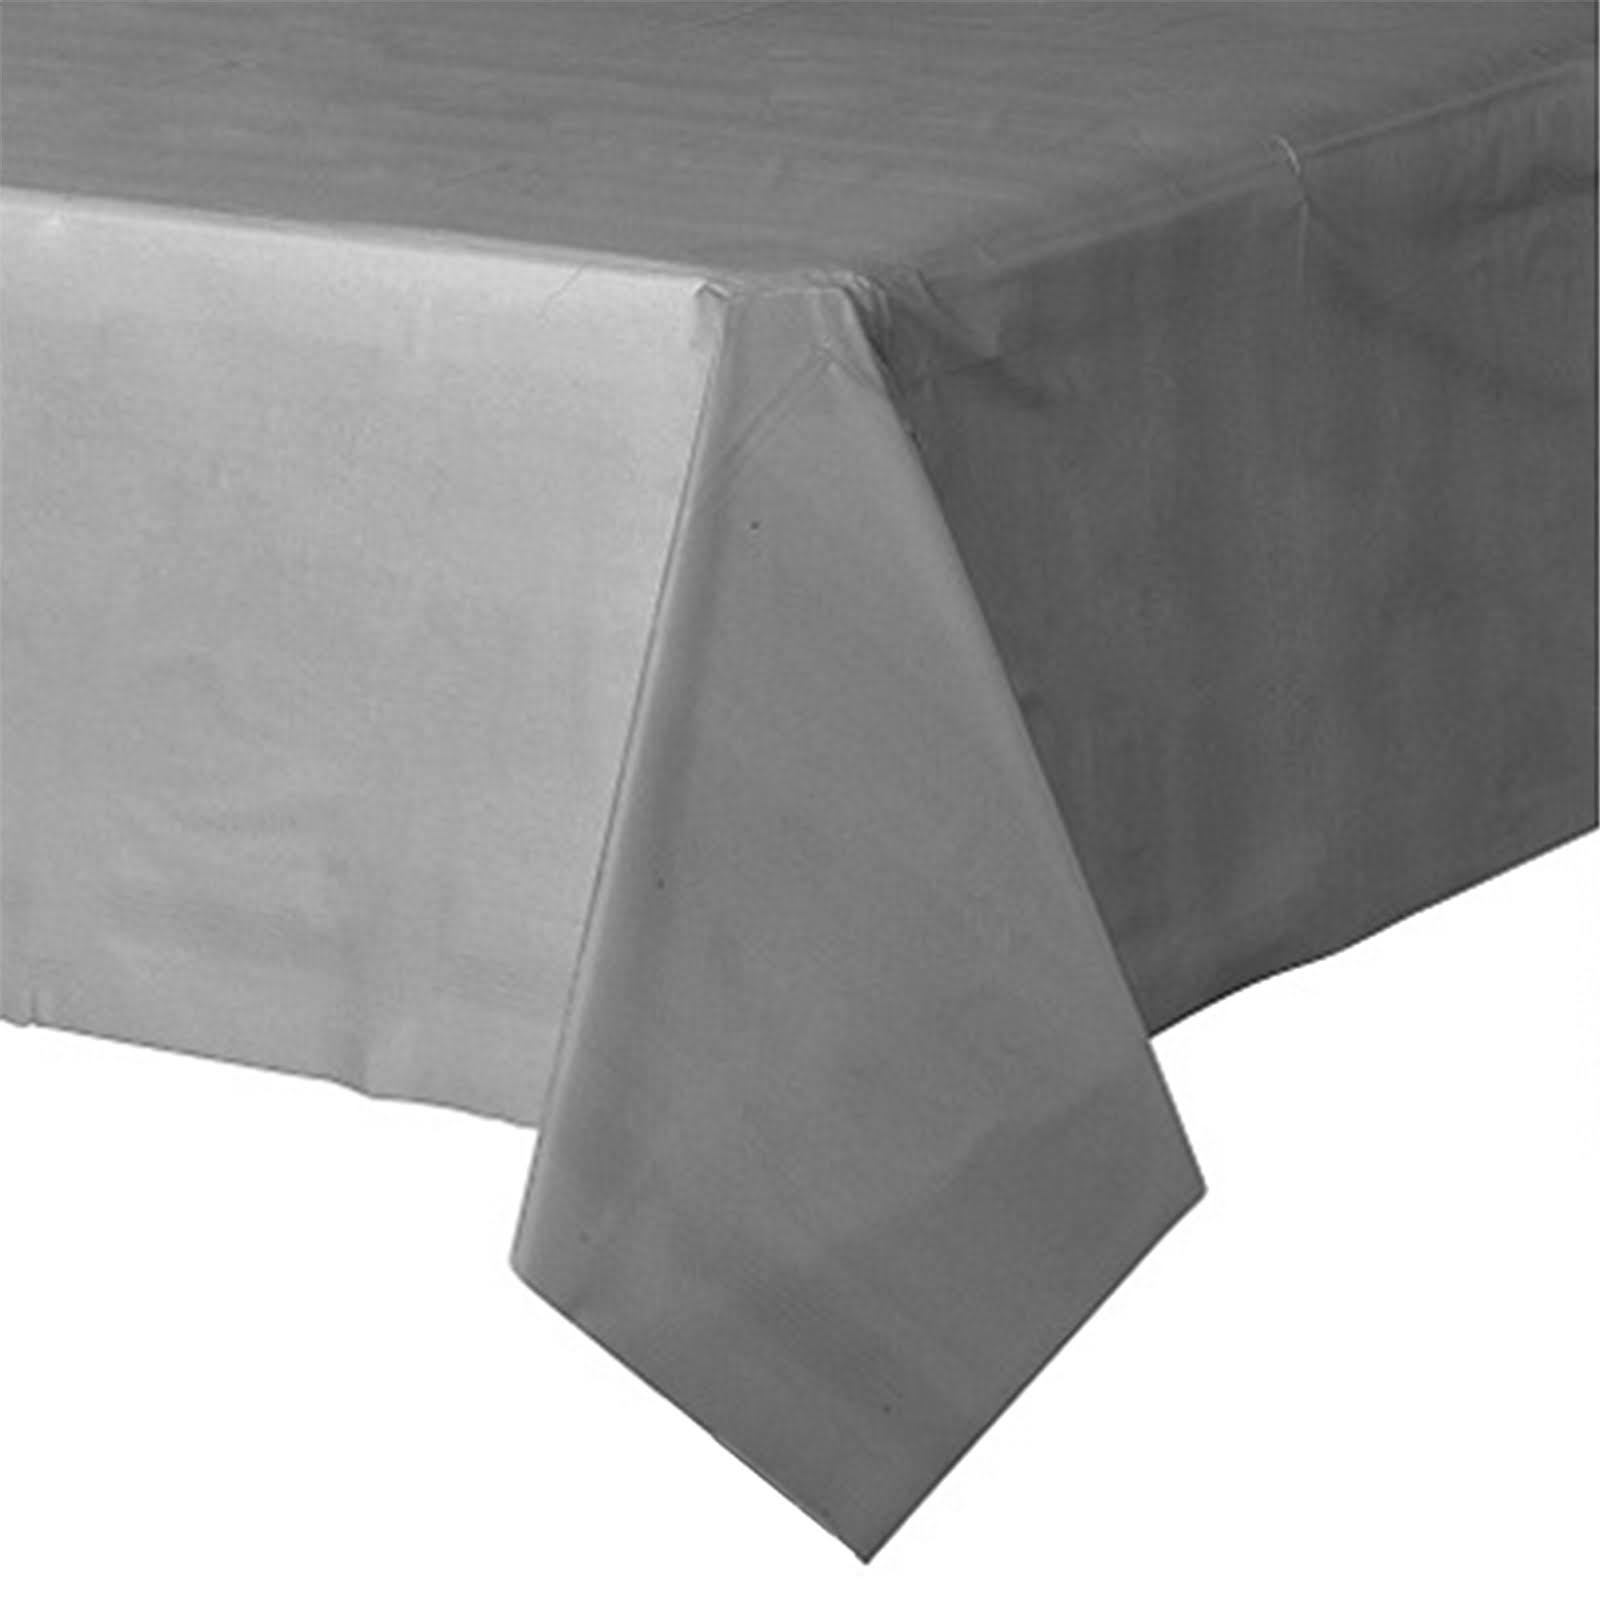 Amscan International Table Skirt Plastic Silver 